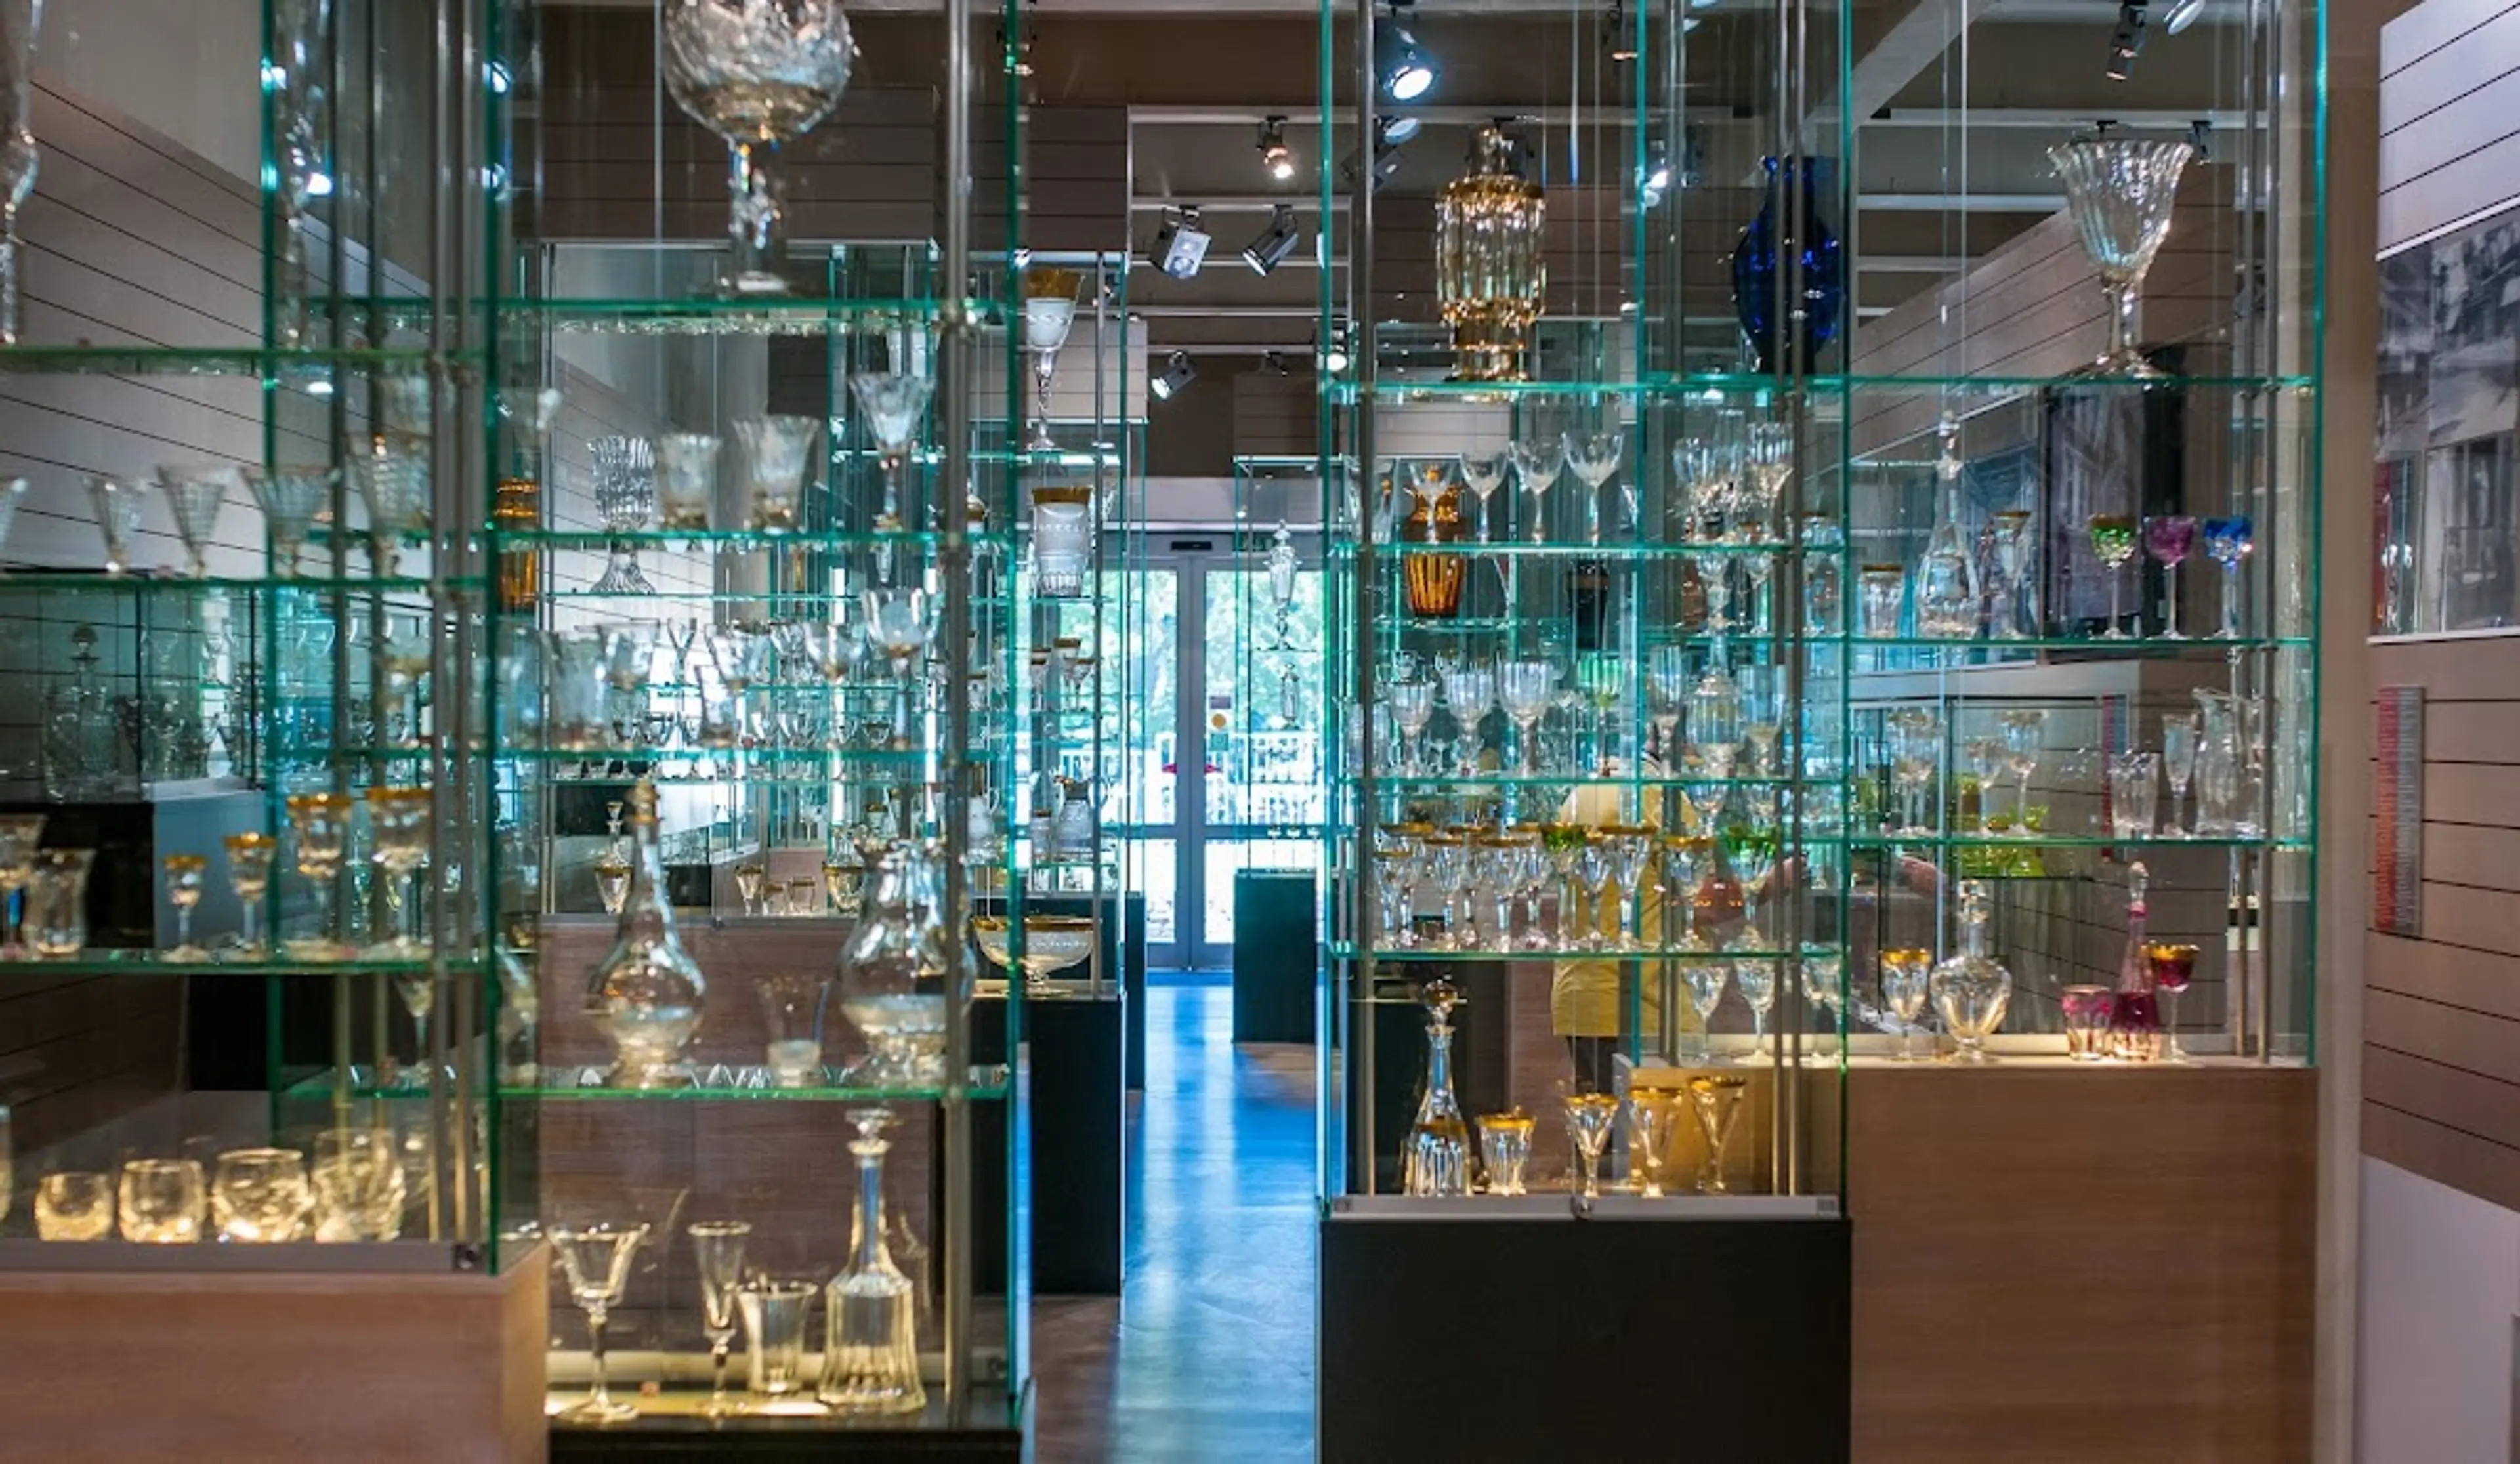 Moser Glass Museum